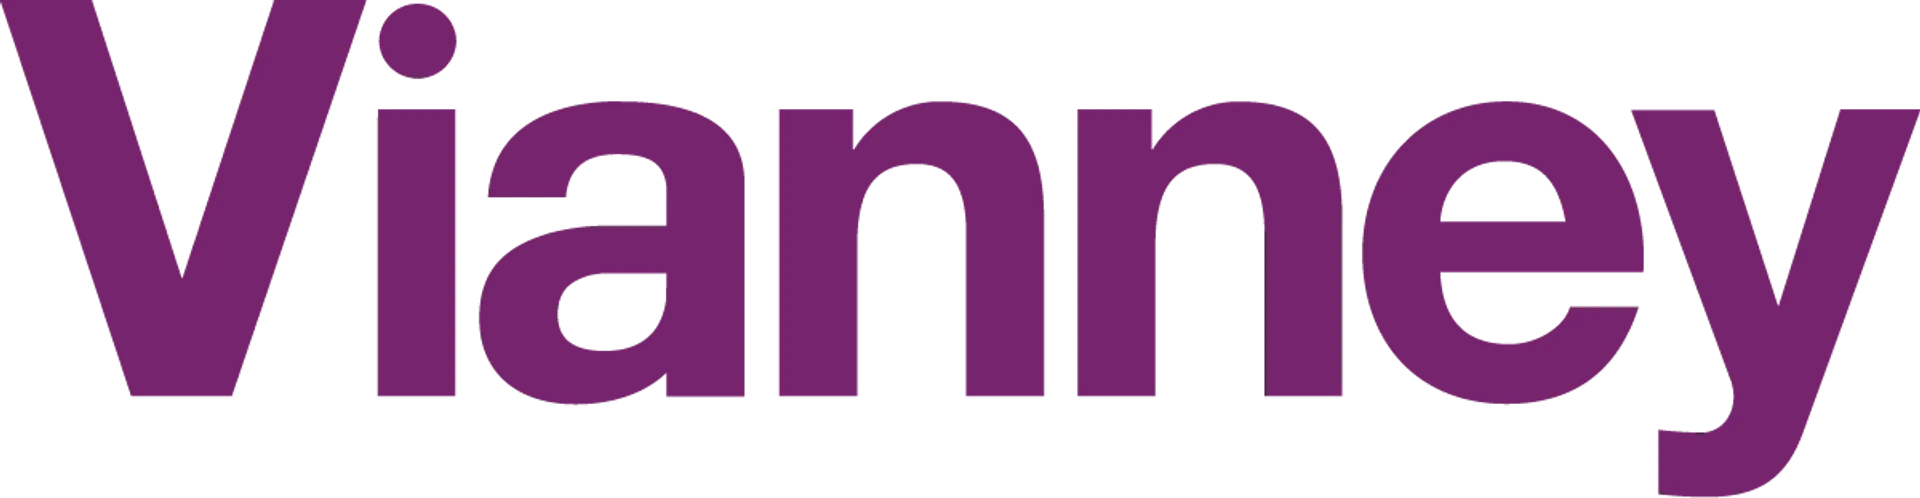 VIANNEY logo